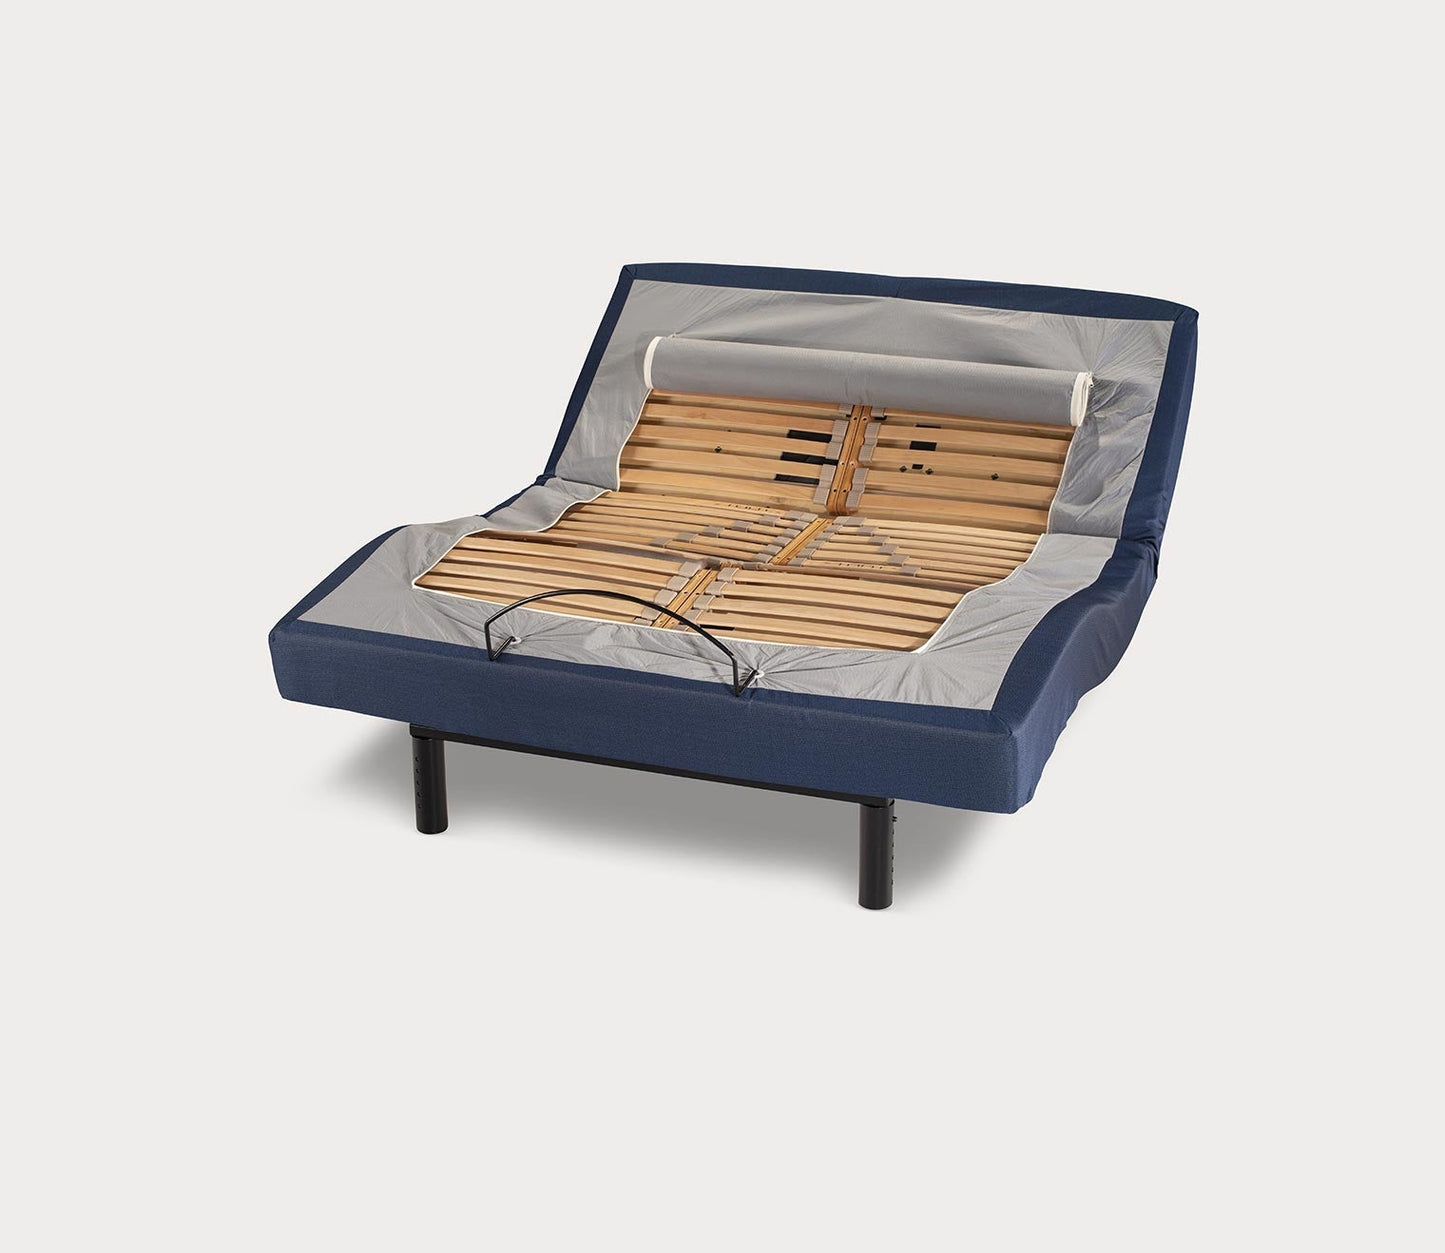 PranaSleep Adjustable EuroSlat Bed Base 5.0 - FLOOR SAMPLE by PranaSleep